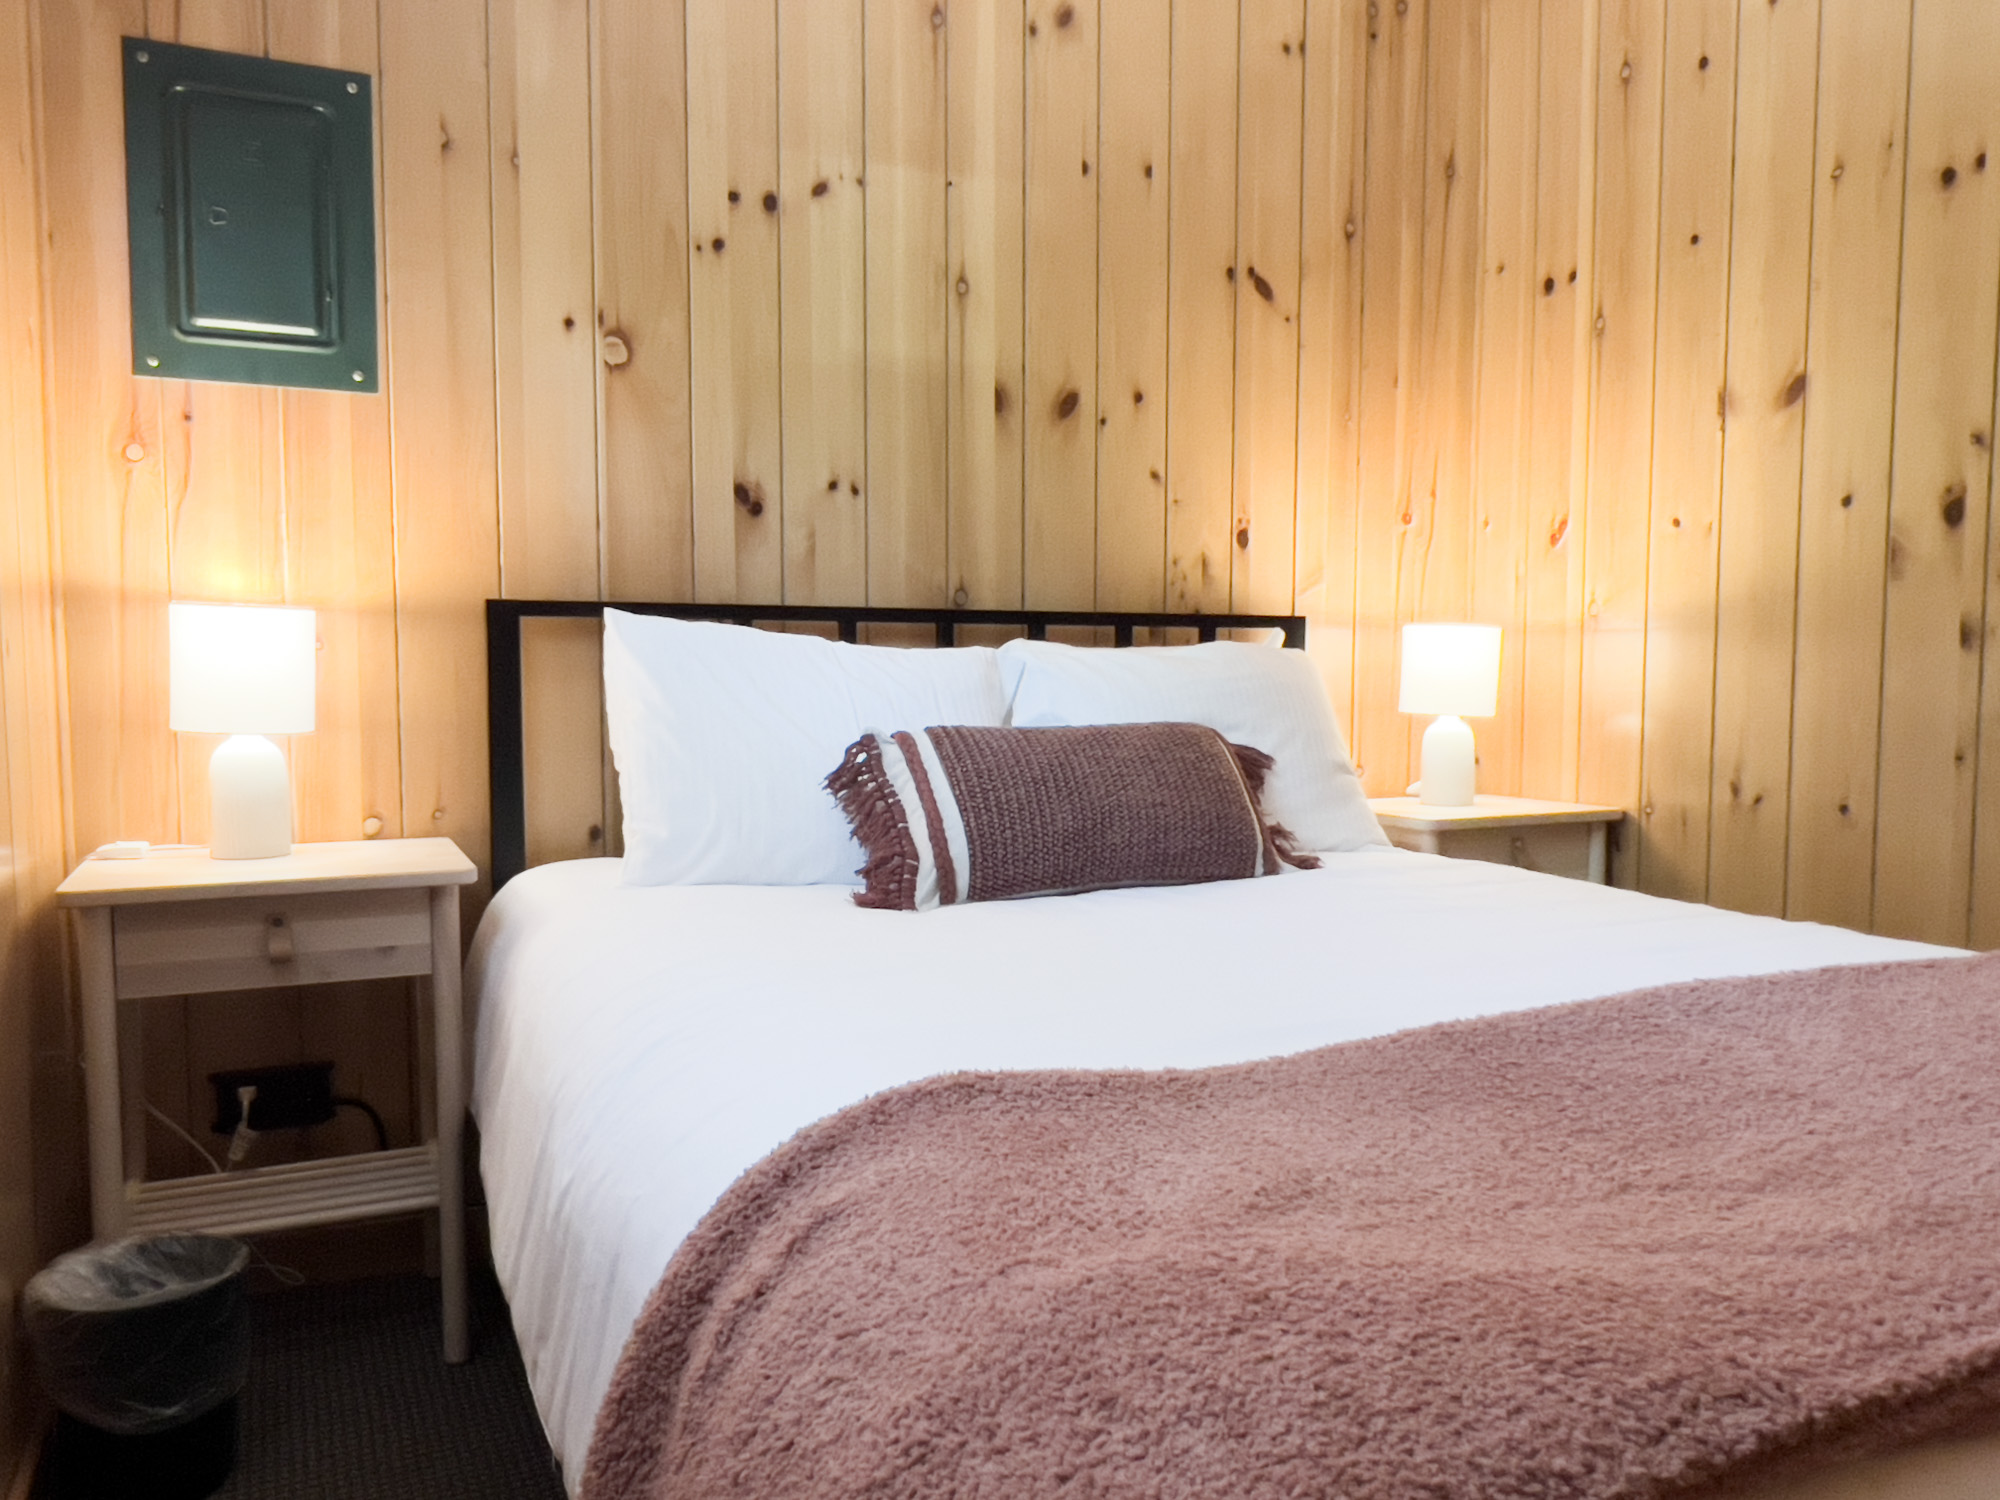 Cabin 4 Queen Bed - at the Sleeping Bear Resort